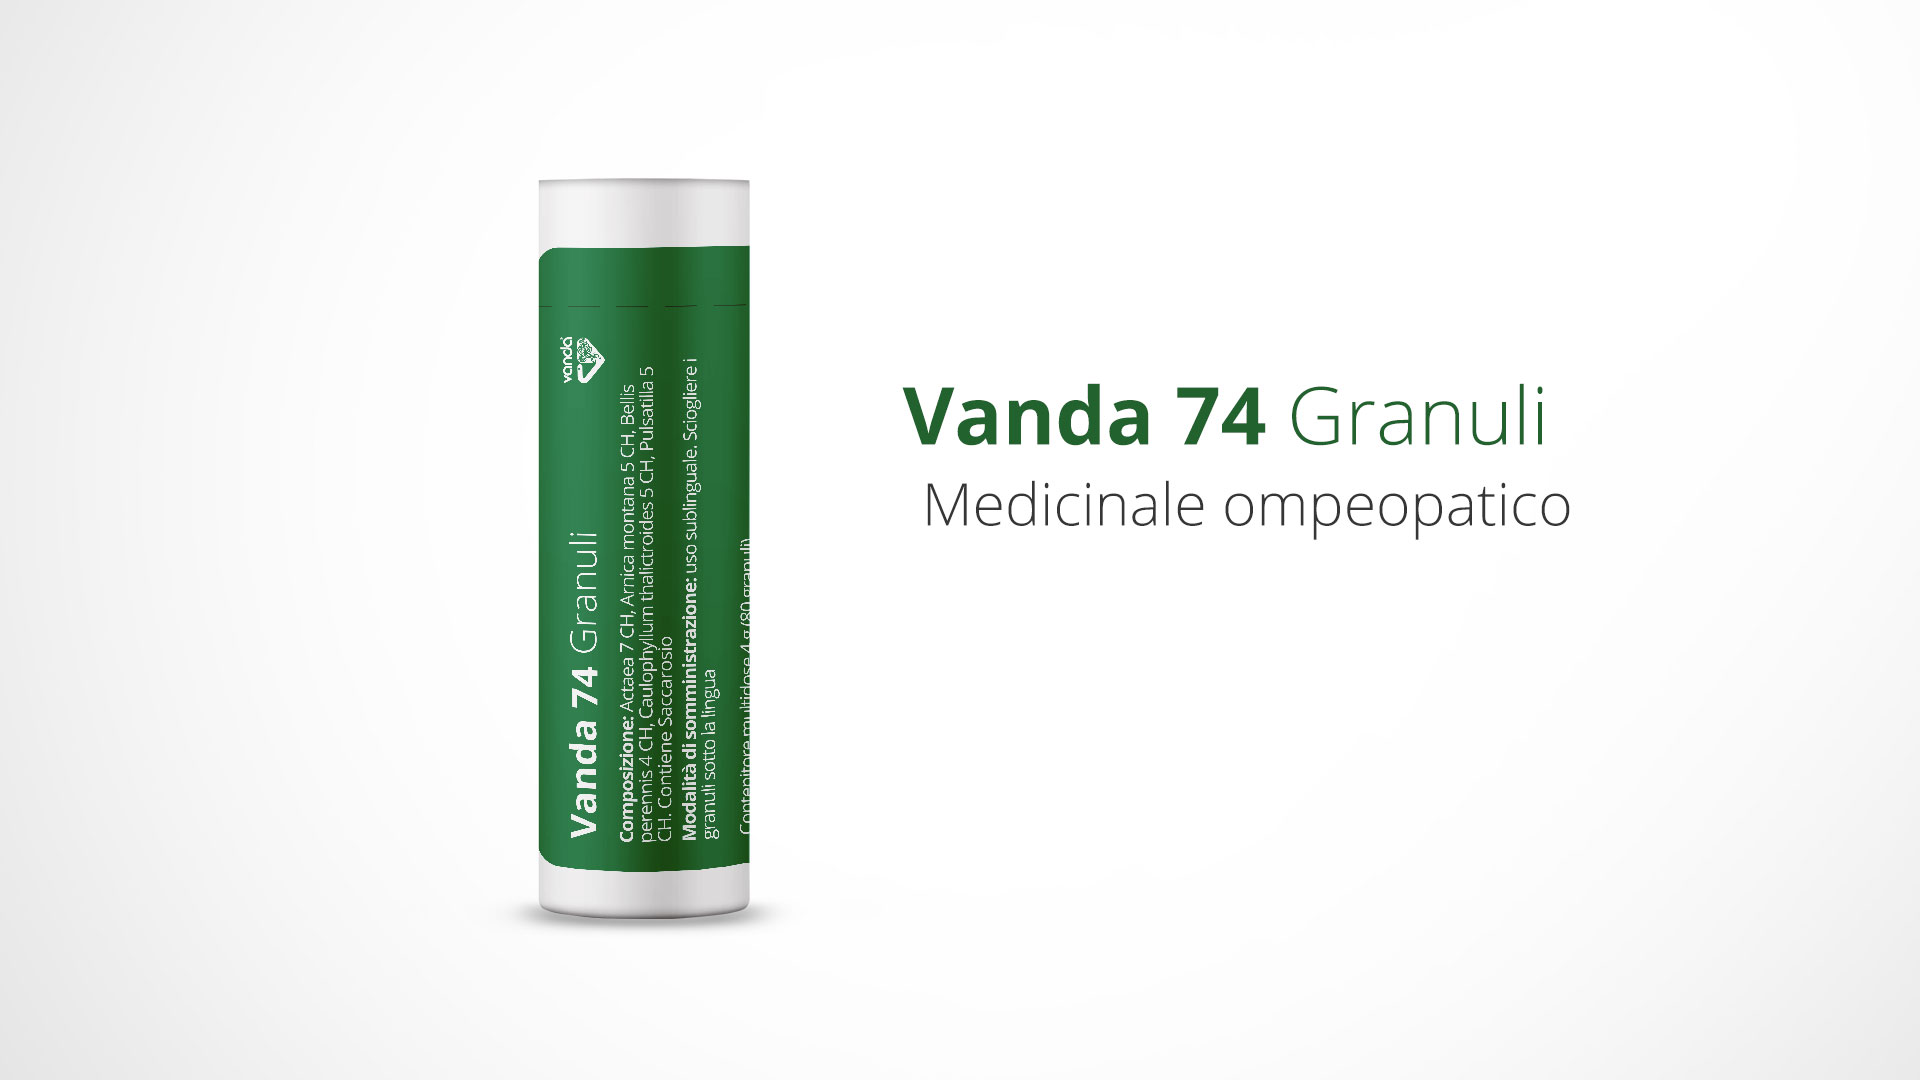 Vanda 74 Granuli. Medicinale omeopatico